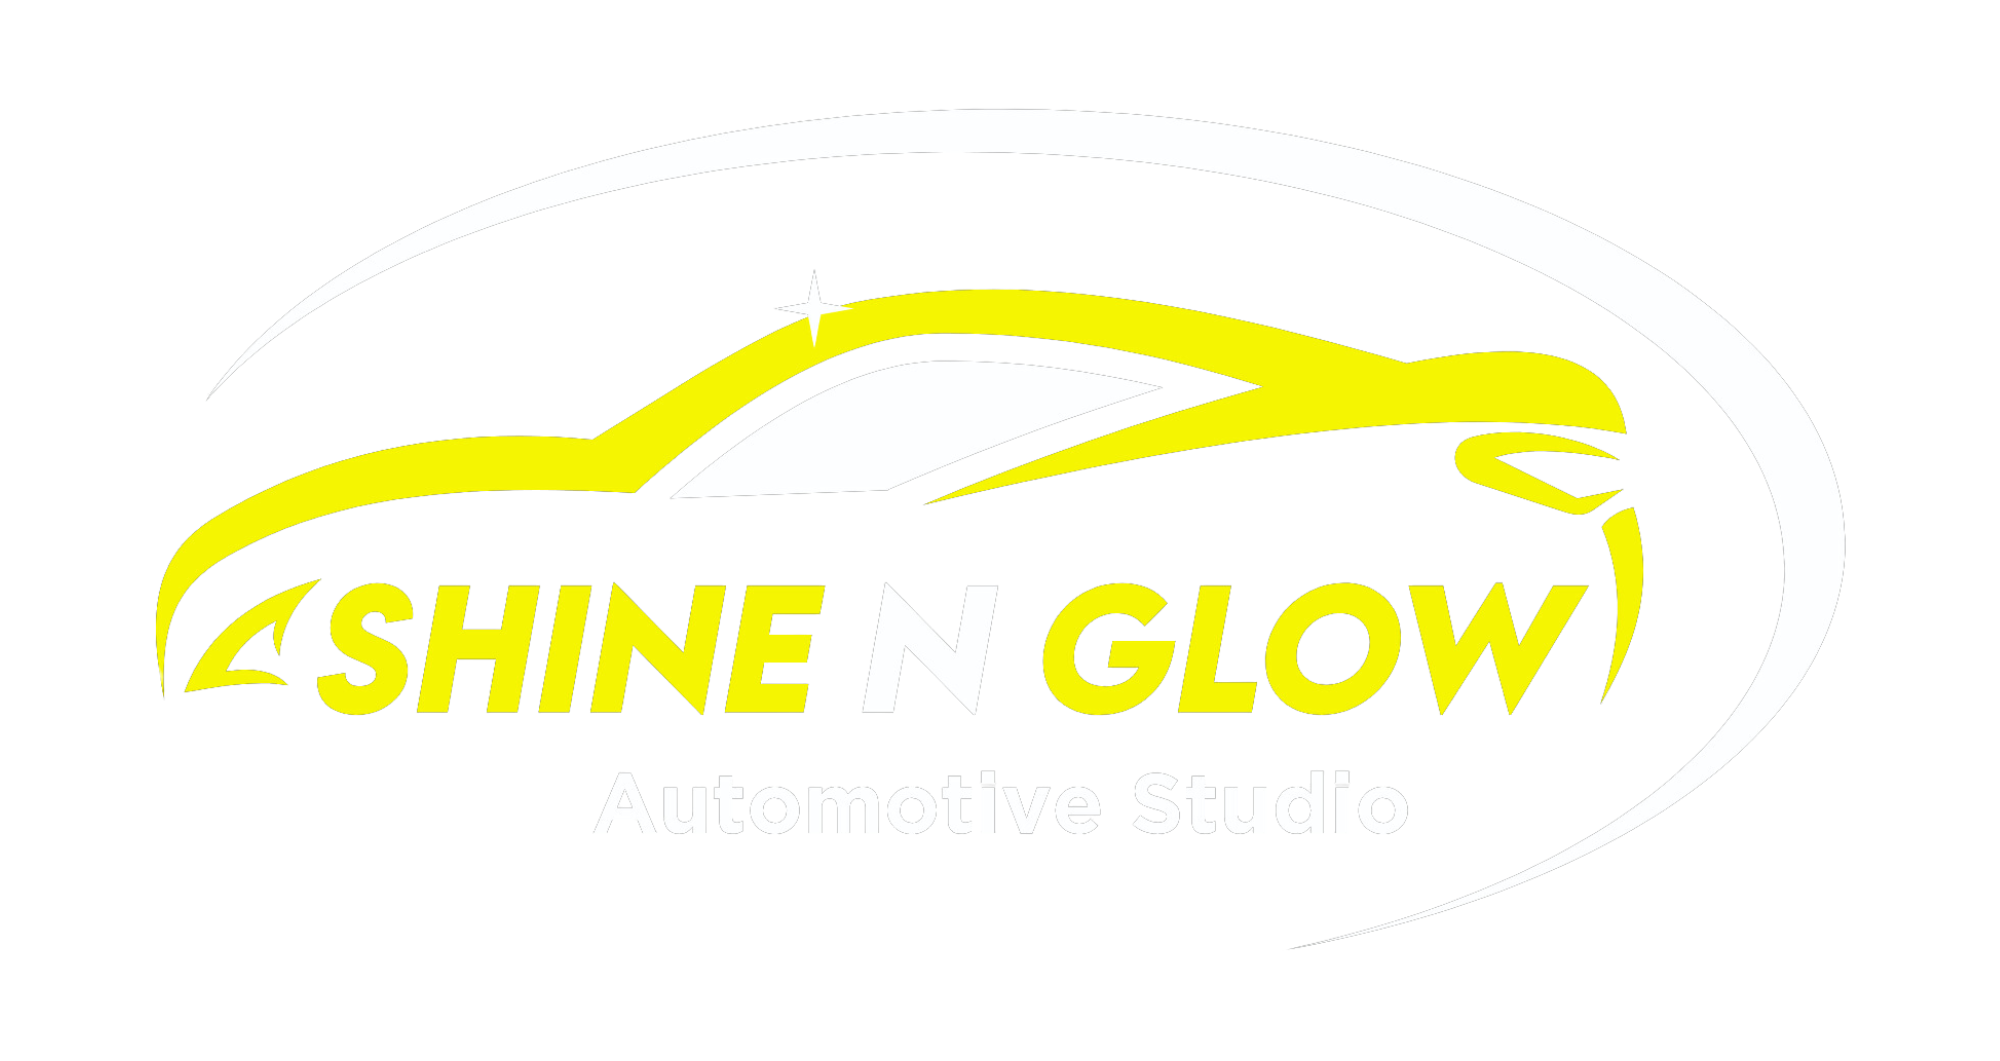 Shine N Glow